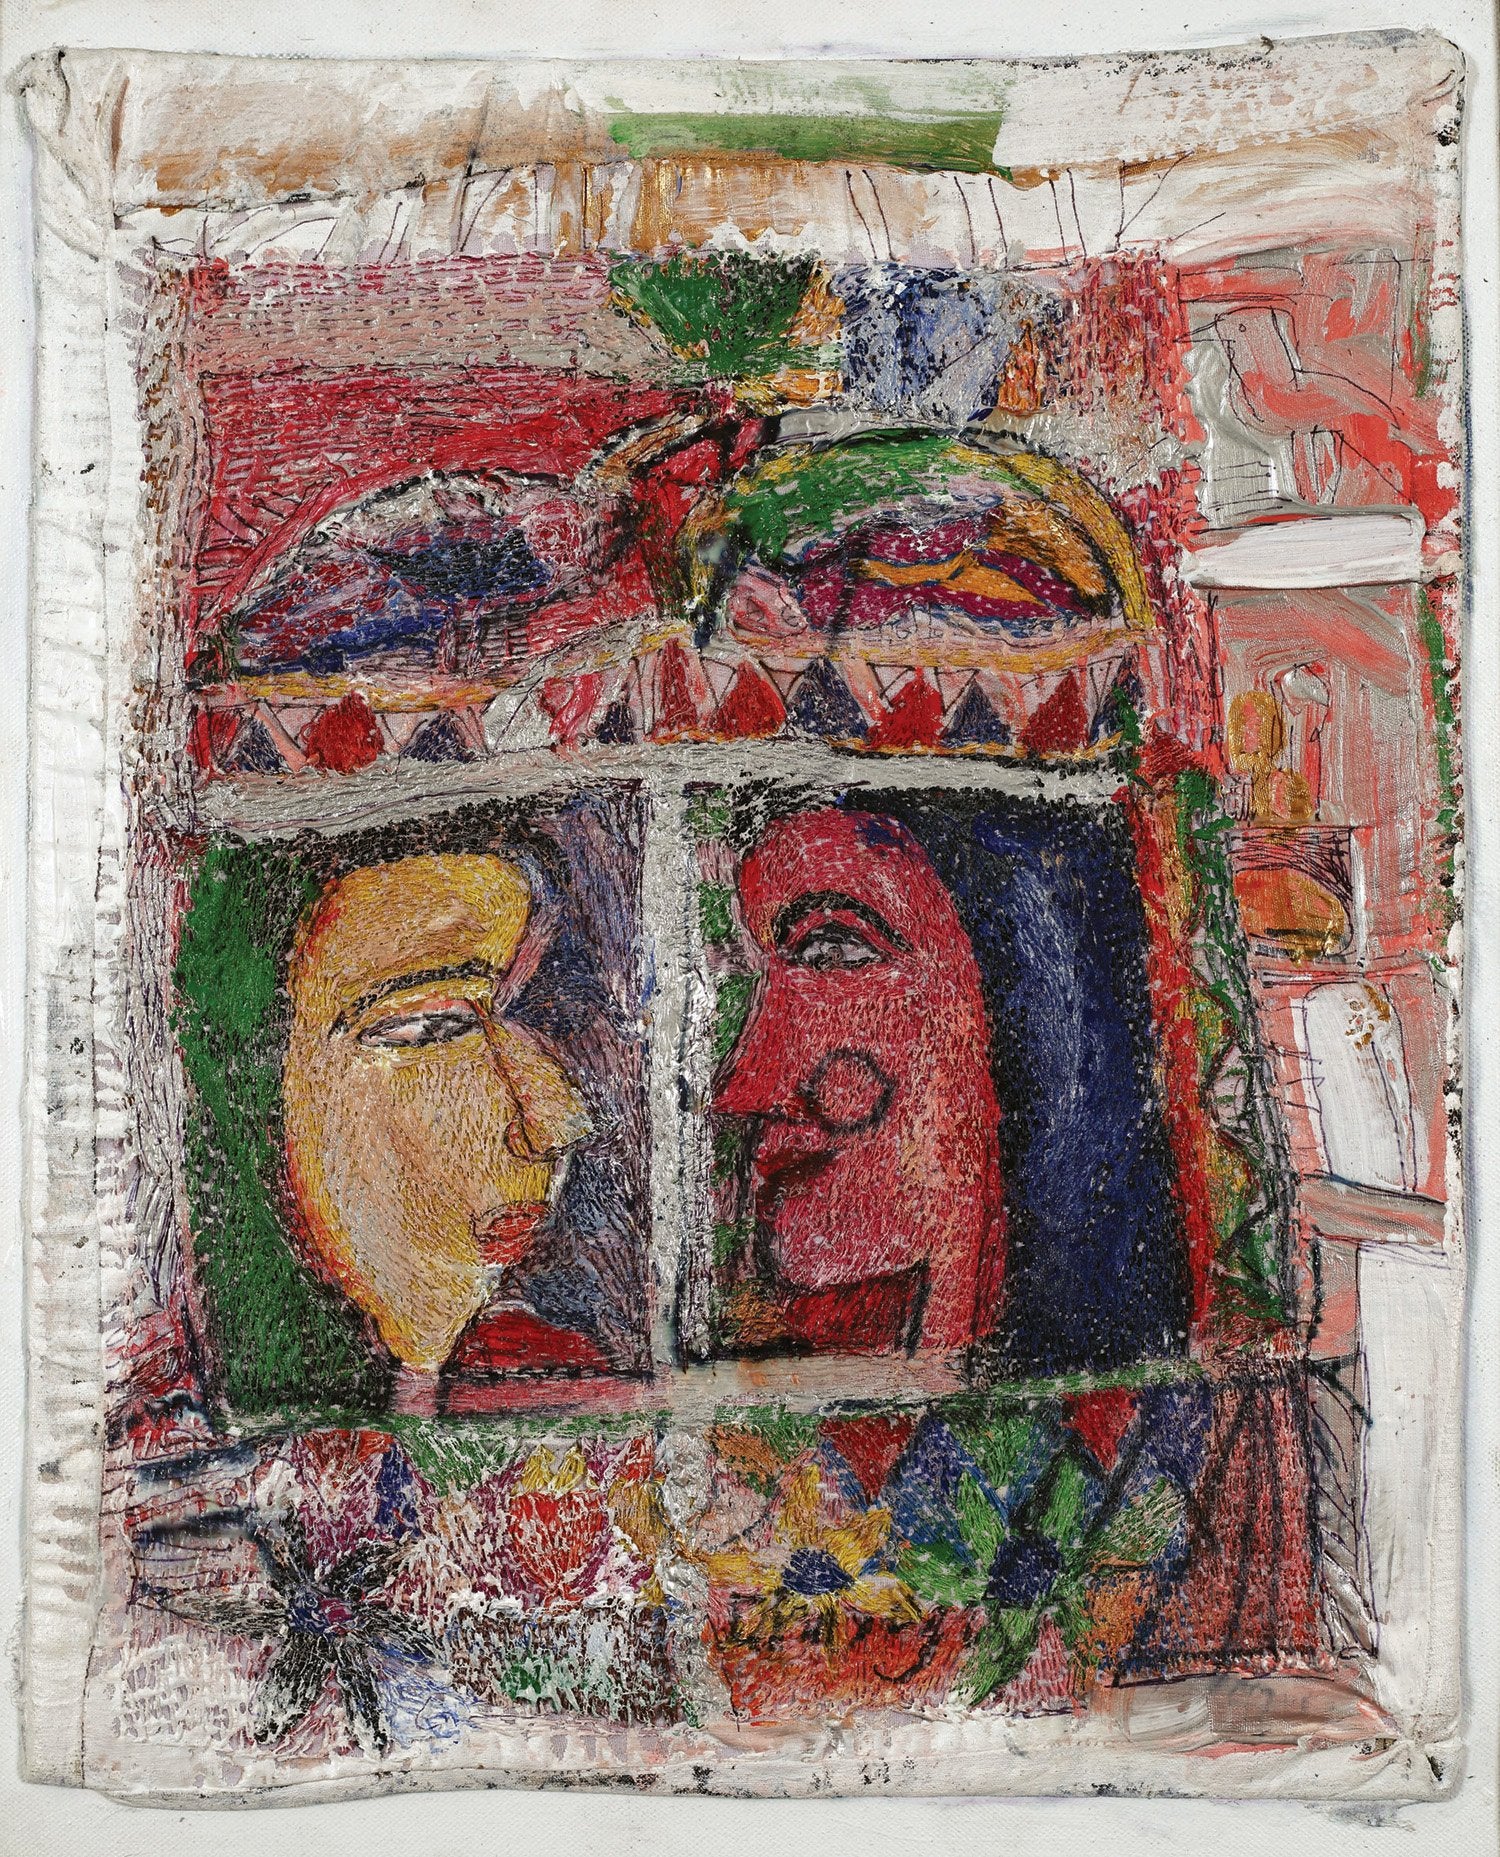 Man and Woman|Dhiraj Choudhury- Needle & Brush, 2016, 18 x 14 inches